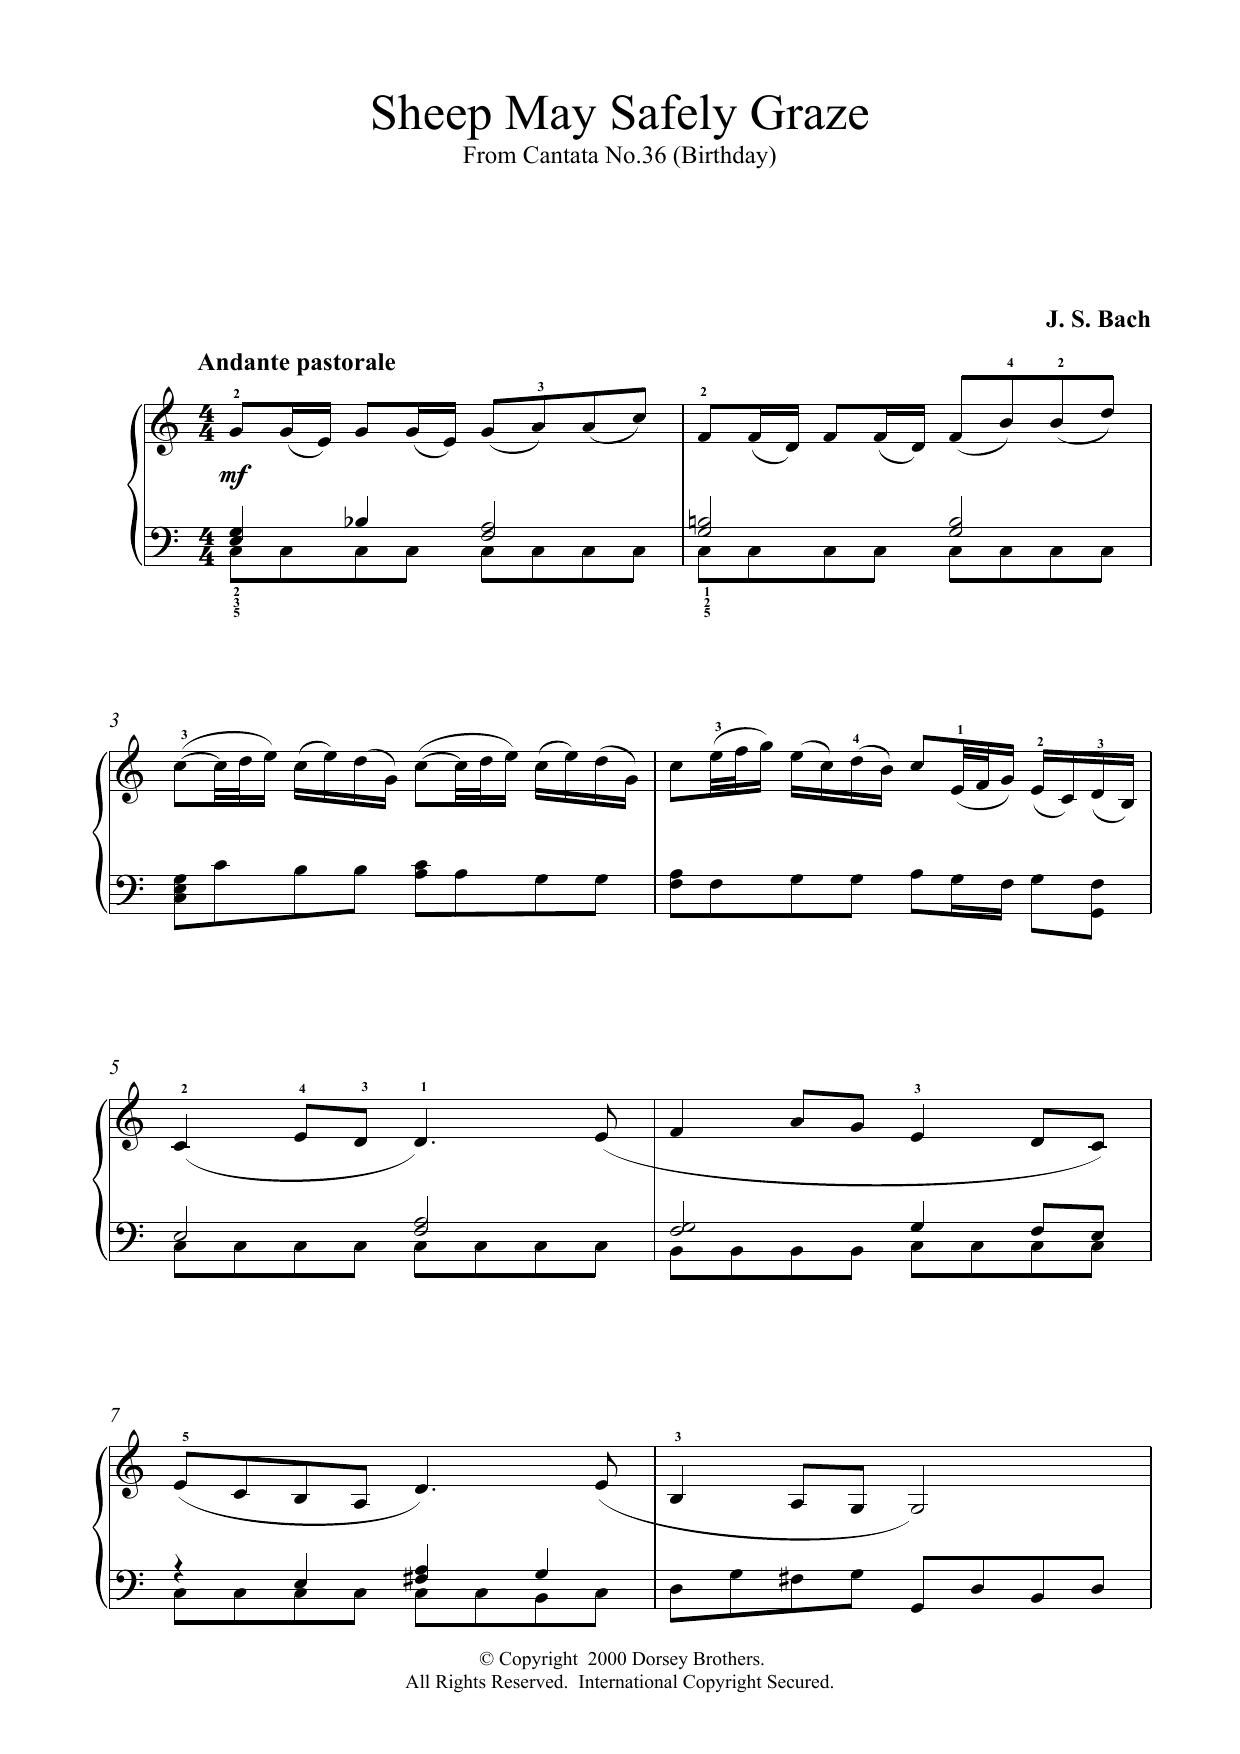 Johann Sebastian Bach Sheep May Safely Graze Sheet Music Notes & Chords for Piano Duet - Download or Print PDF